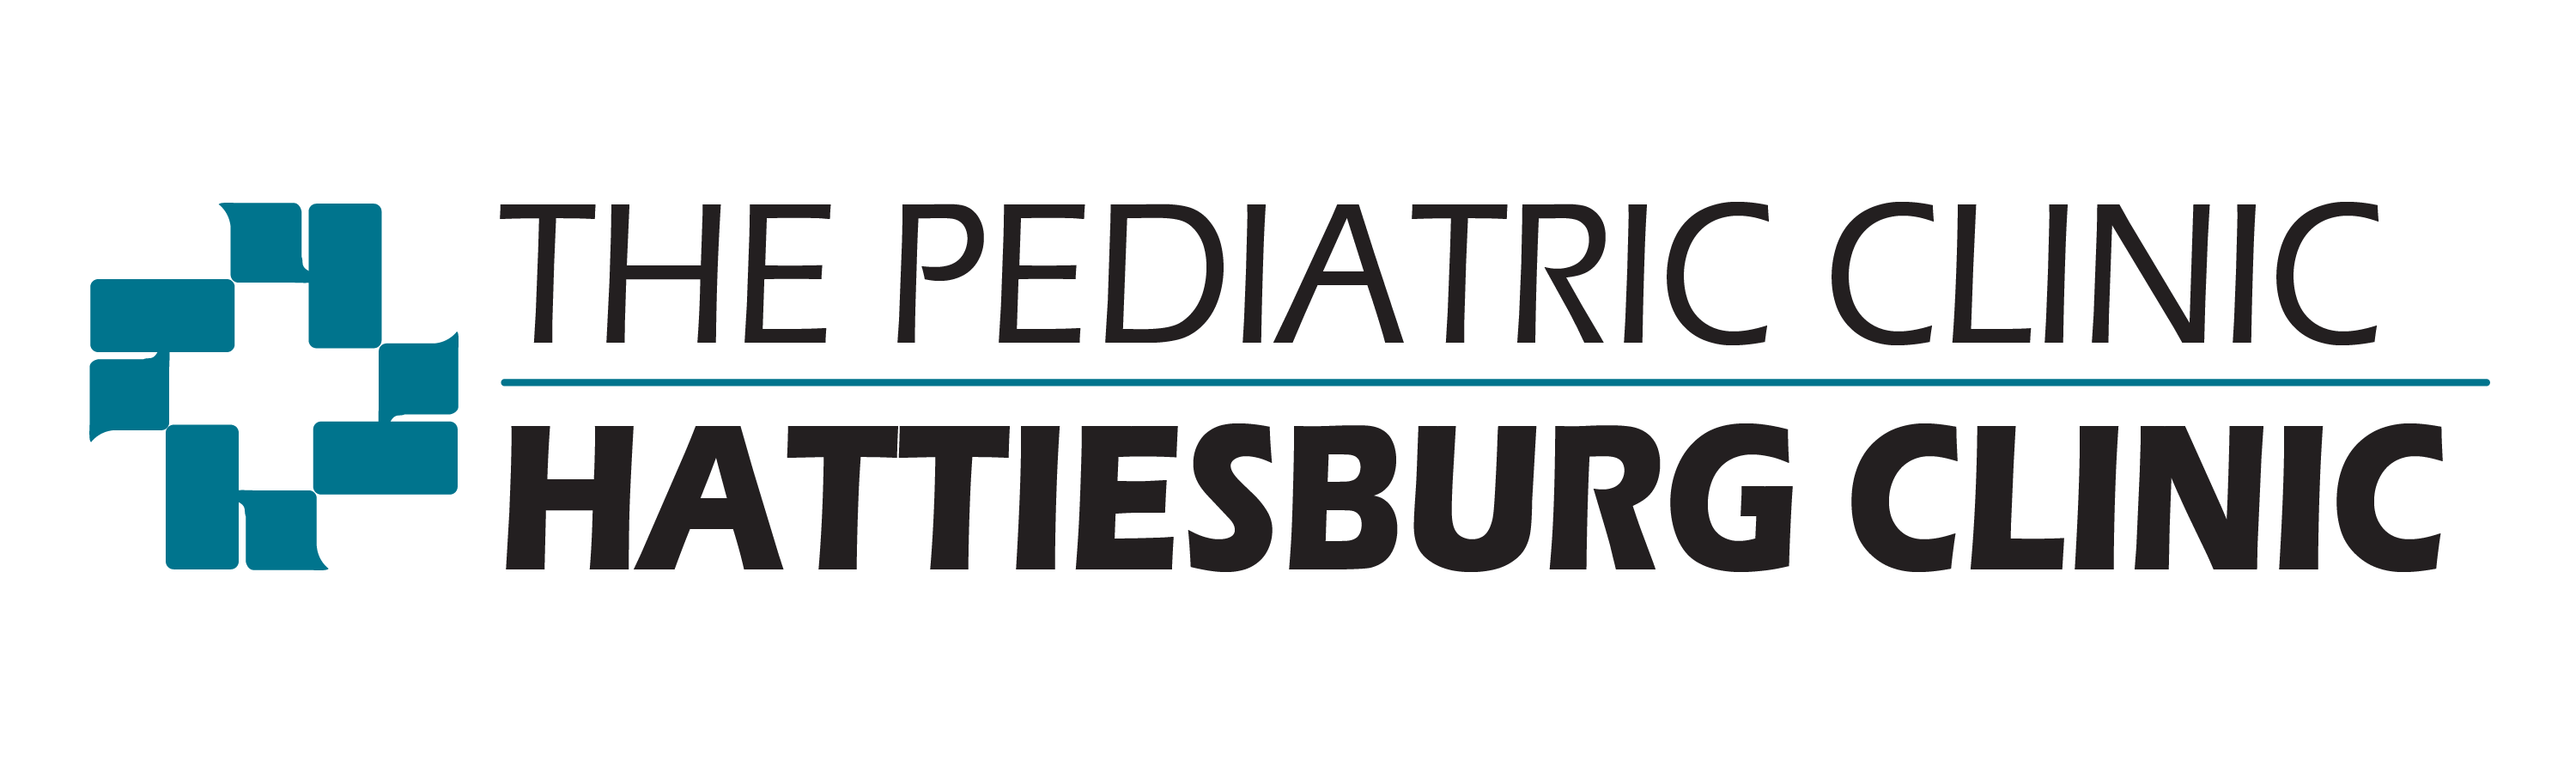 The Pediatric Clinic logo